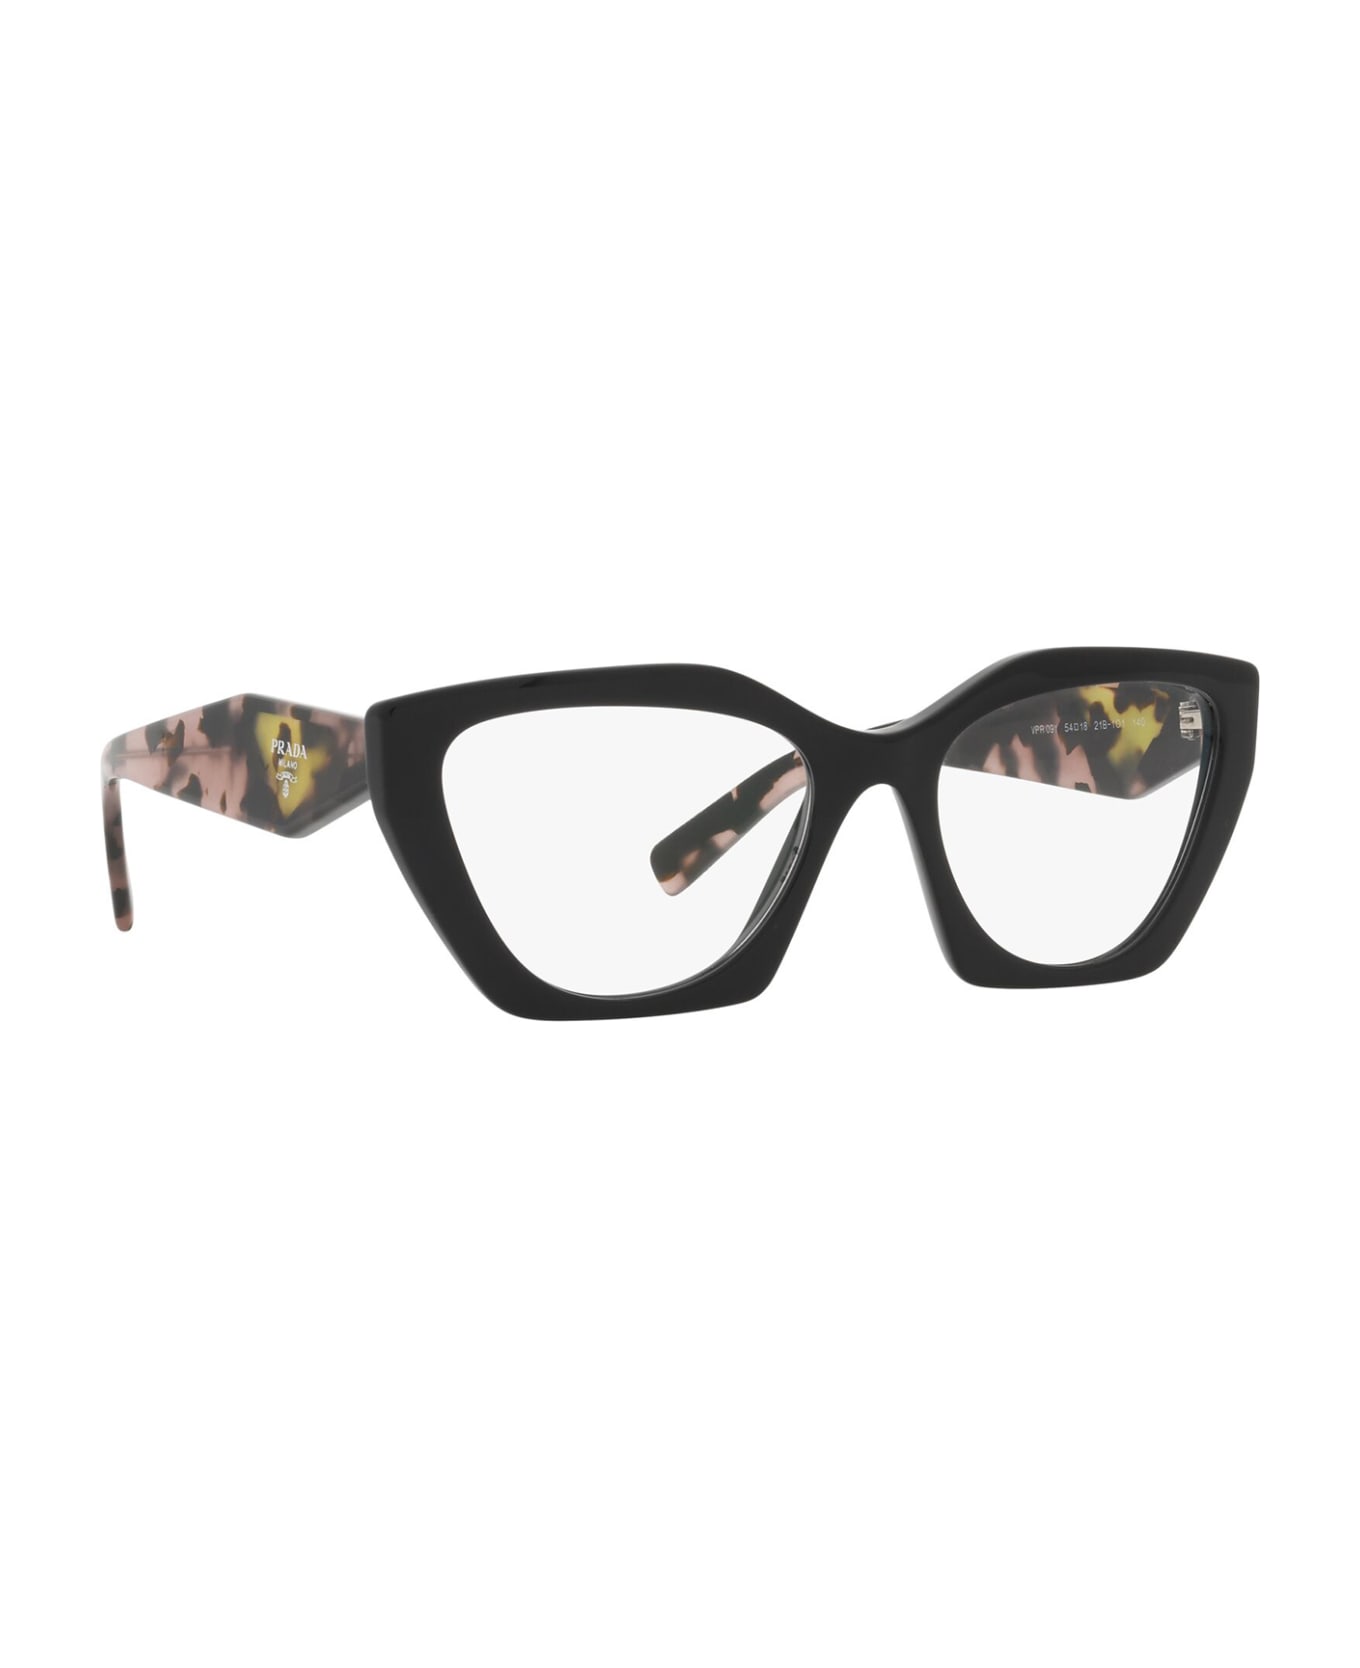 Prada Eyewear Pr 09yv Black Glasses - Black